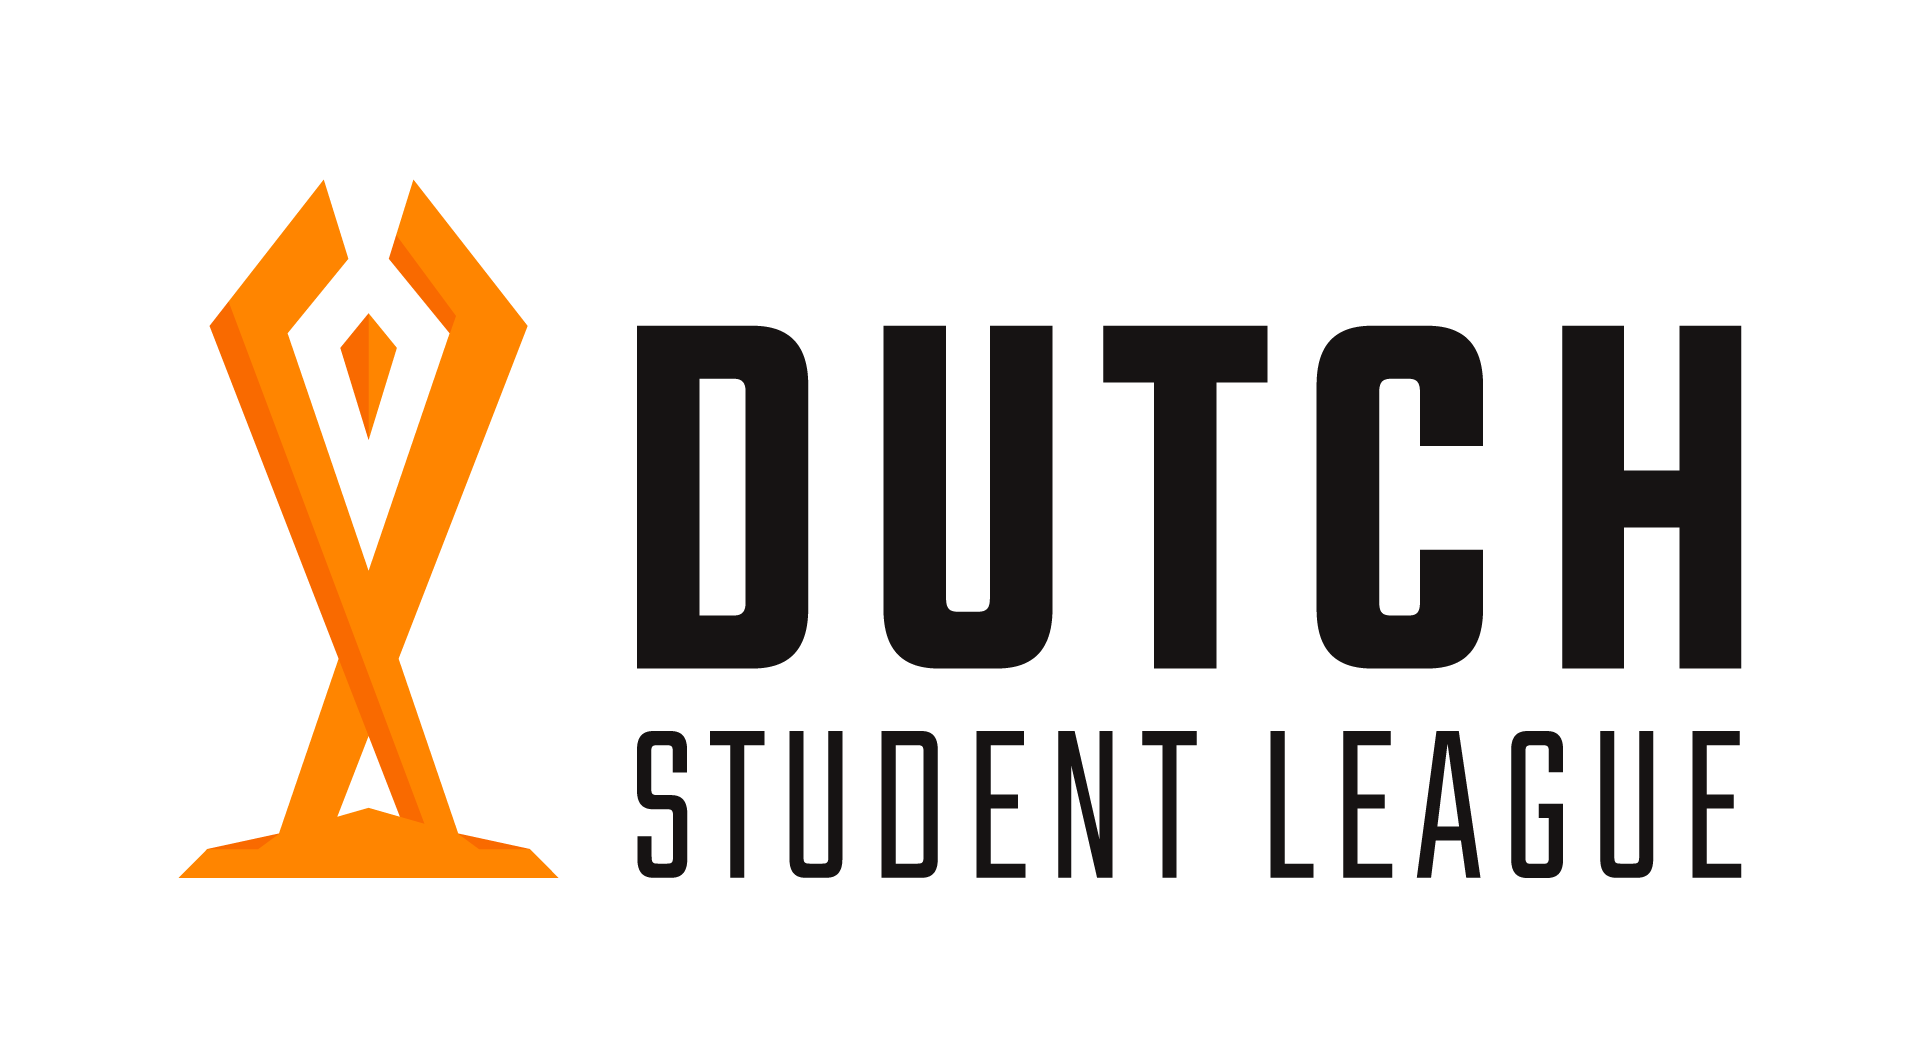 Belgian Student League